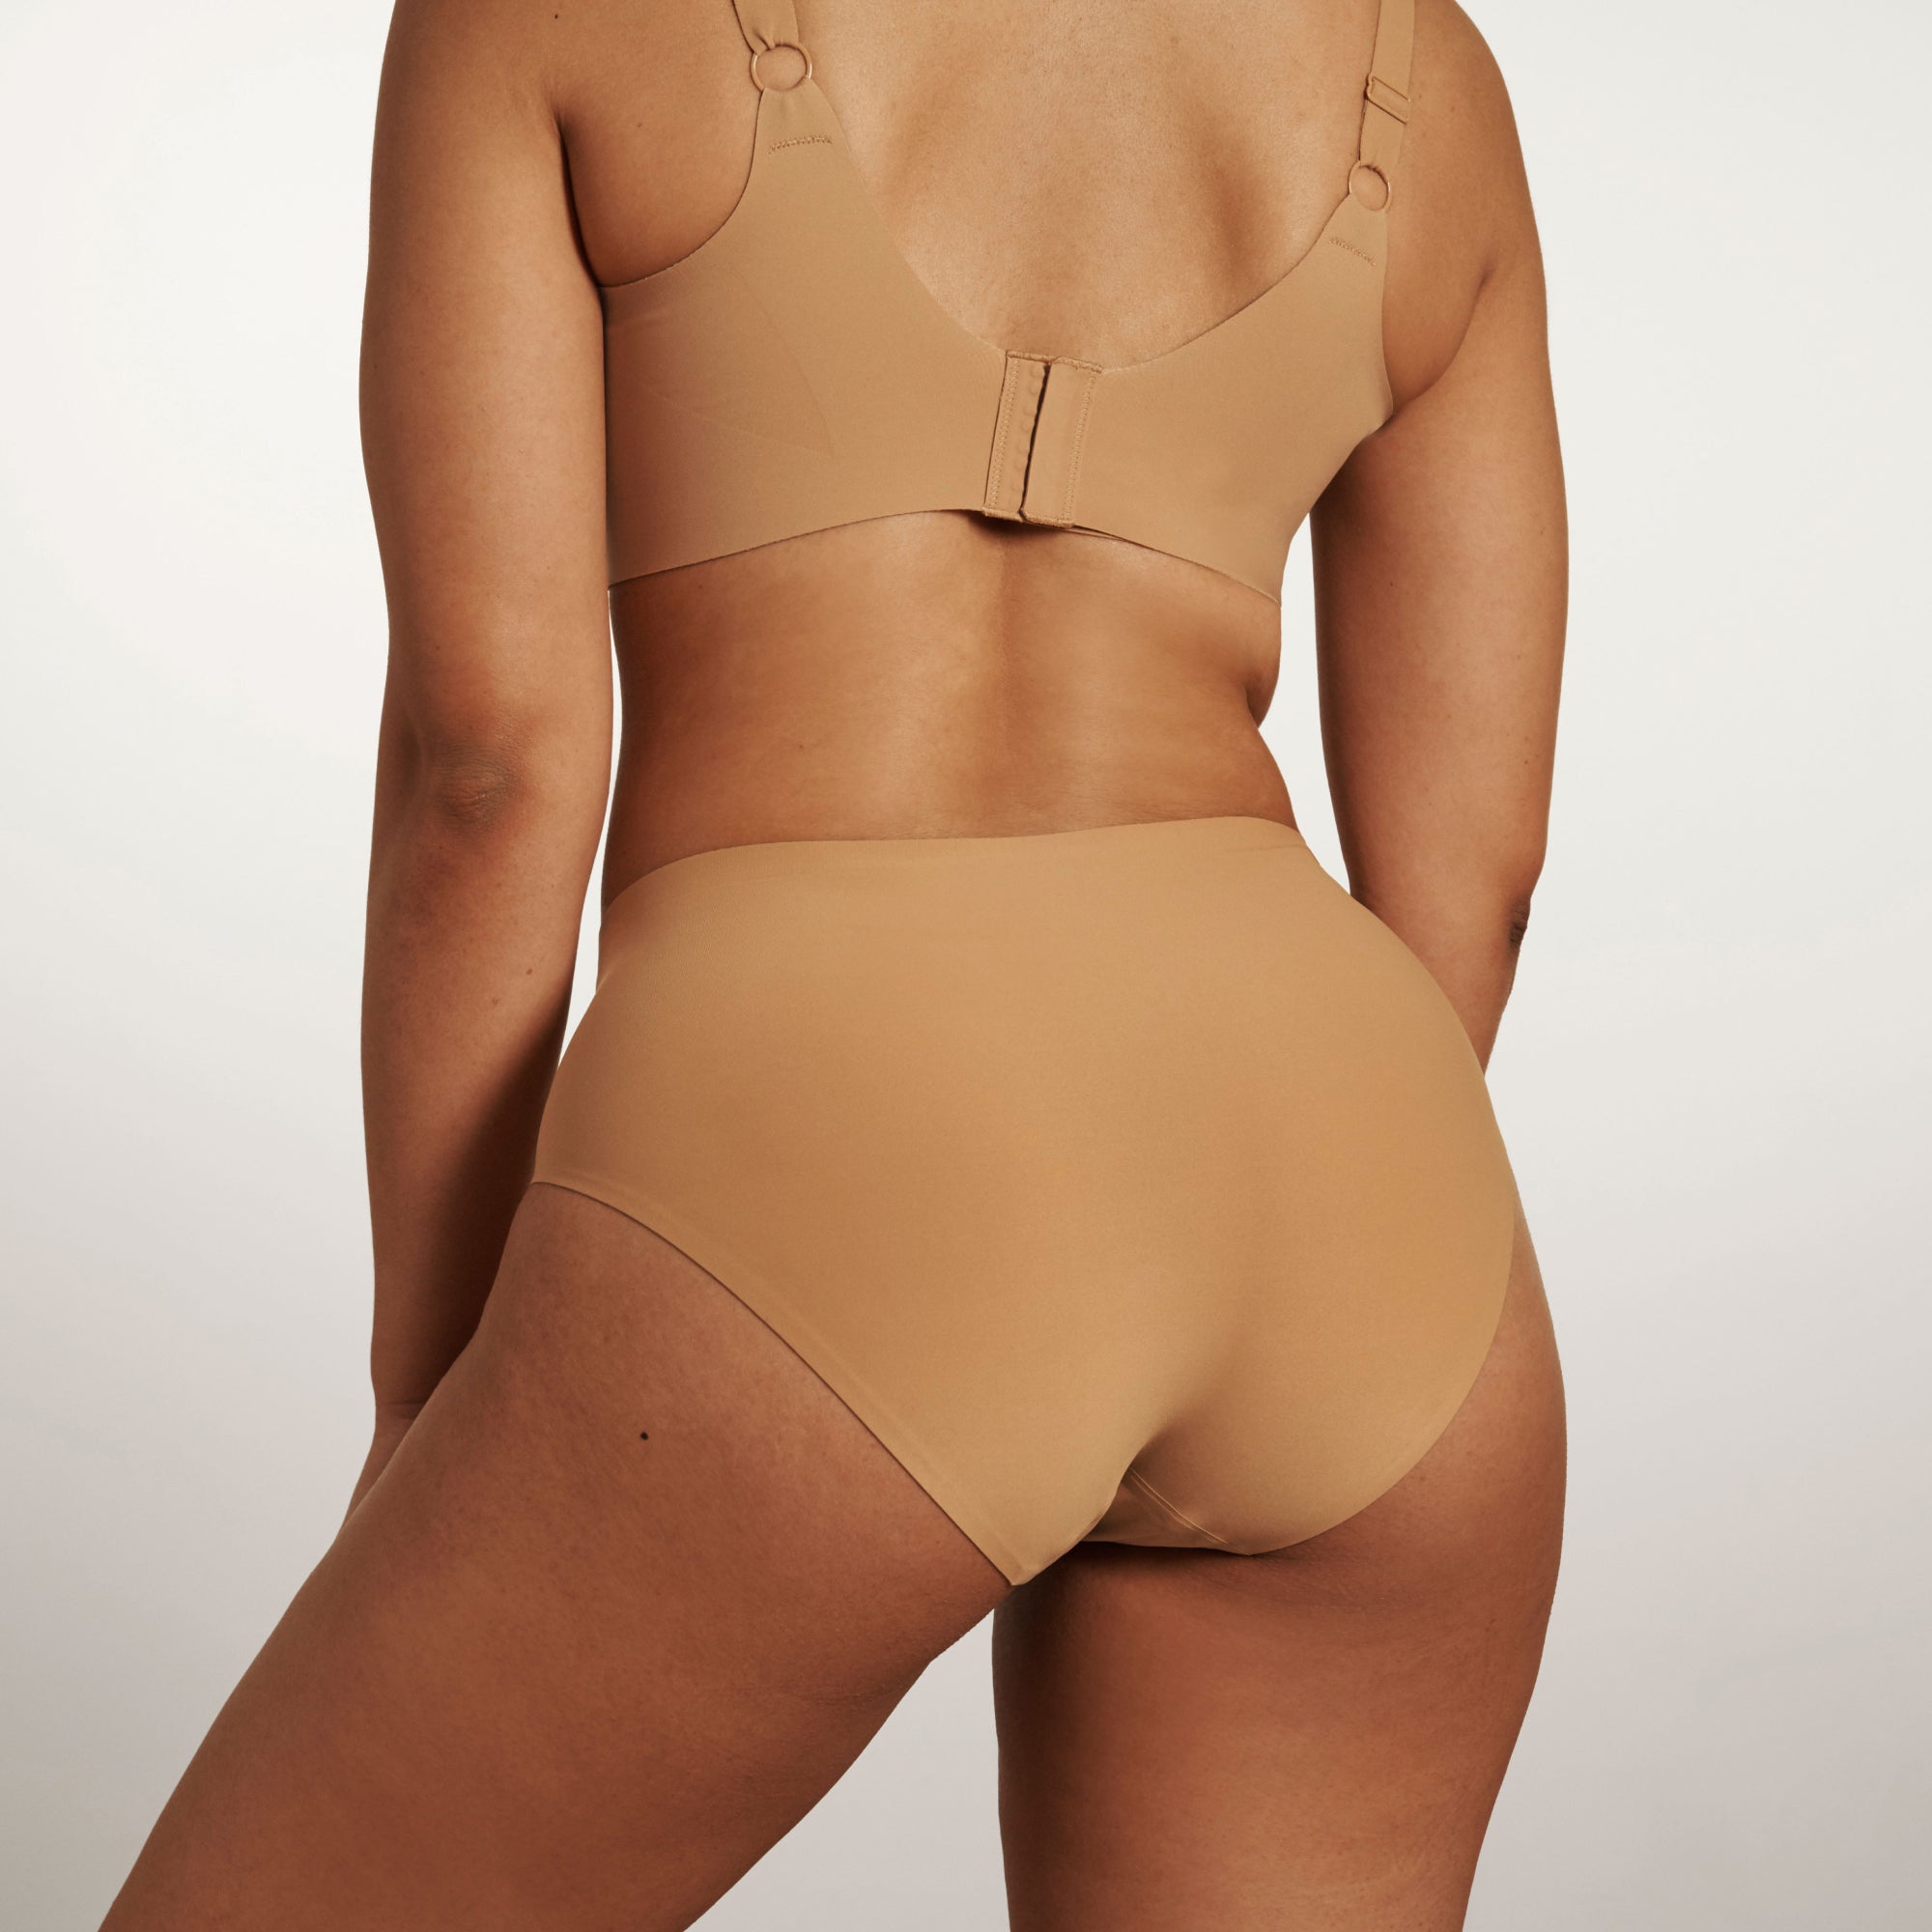 Jodimitty Push Up Bathing Suits for Women High Waisted Wrap Bikini